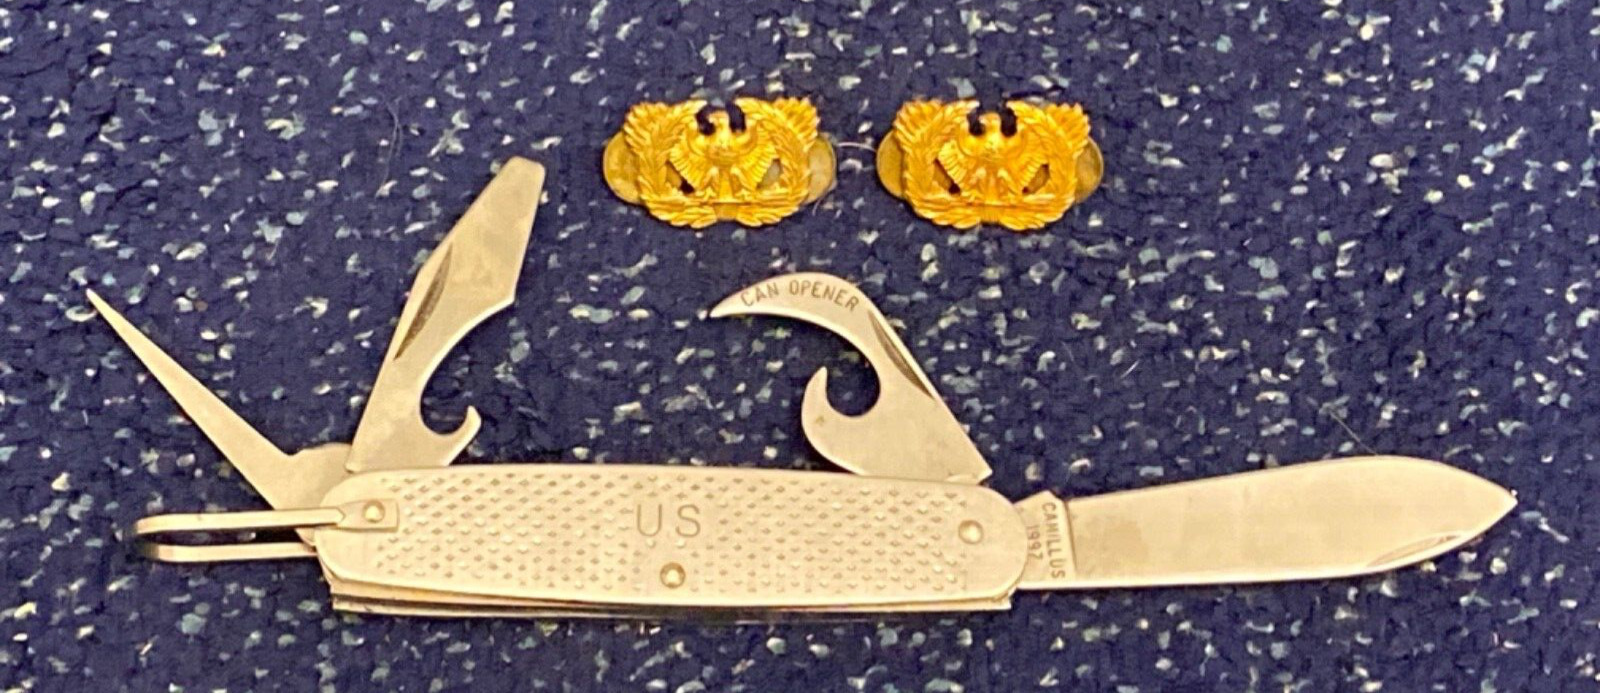 1997 VTG US Military Camillus Stainless Folding Pocket Knife 4 Blade lot  pins